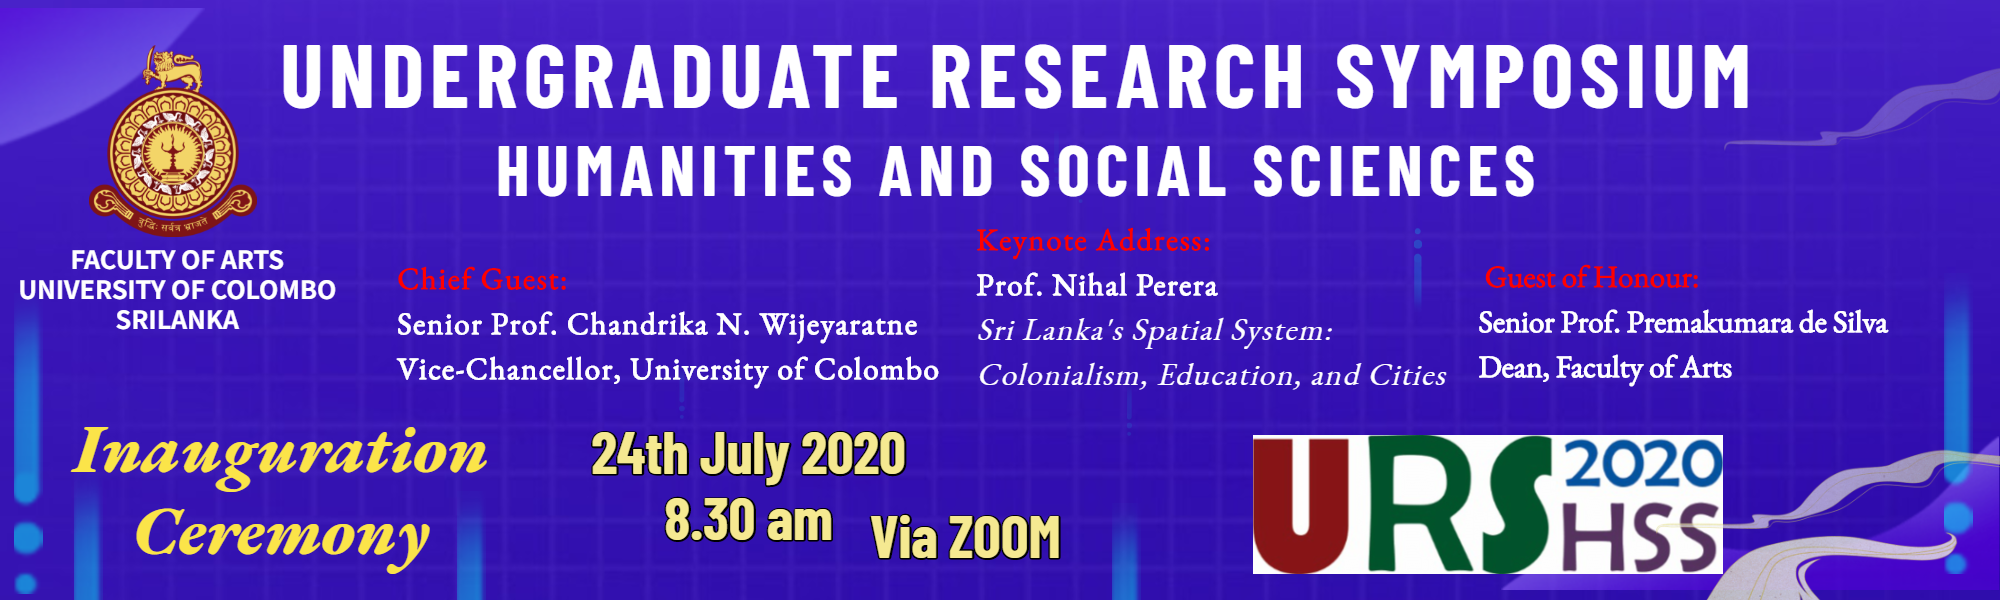 Undergraduate Research Symposium 2020 – 24th July